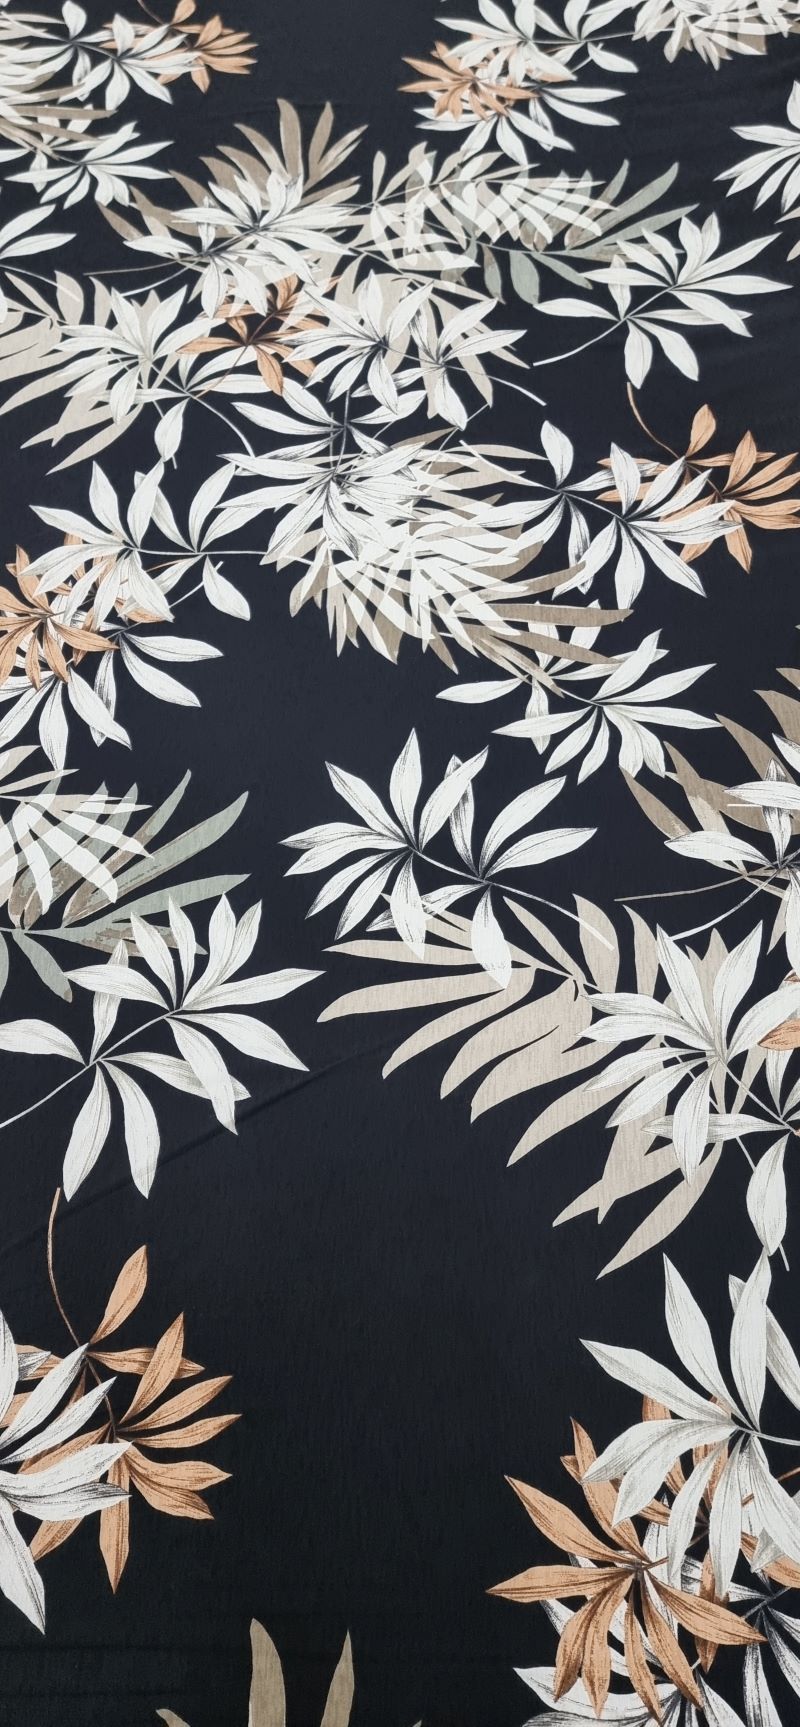 Printed Knit Autumn Leaves | DK Fabrics